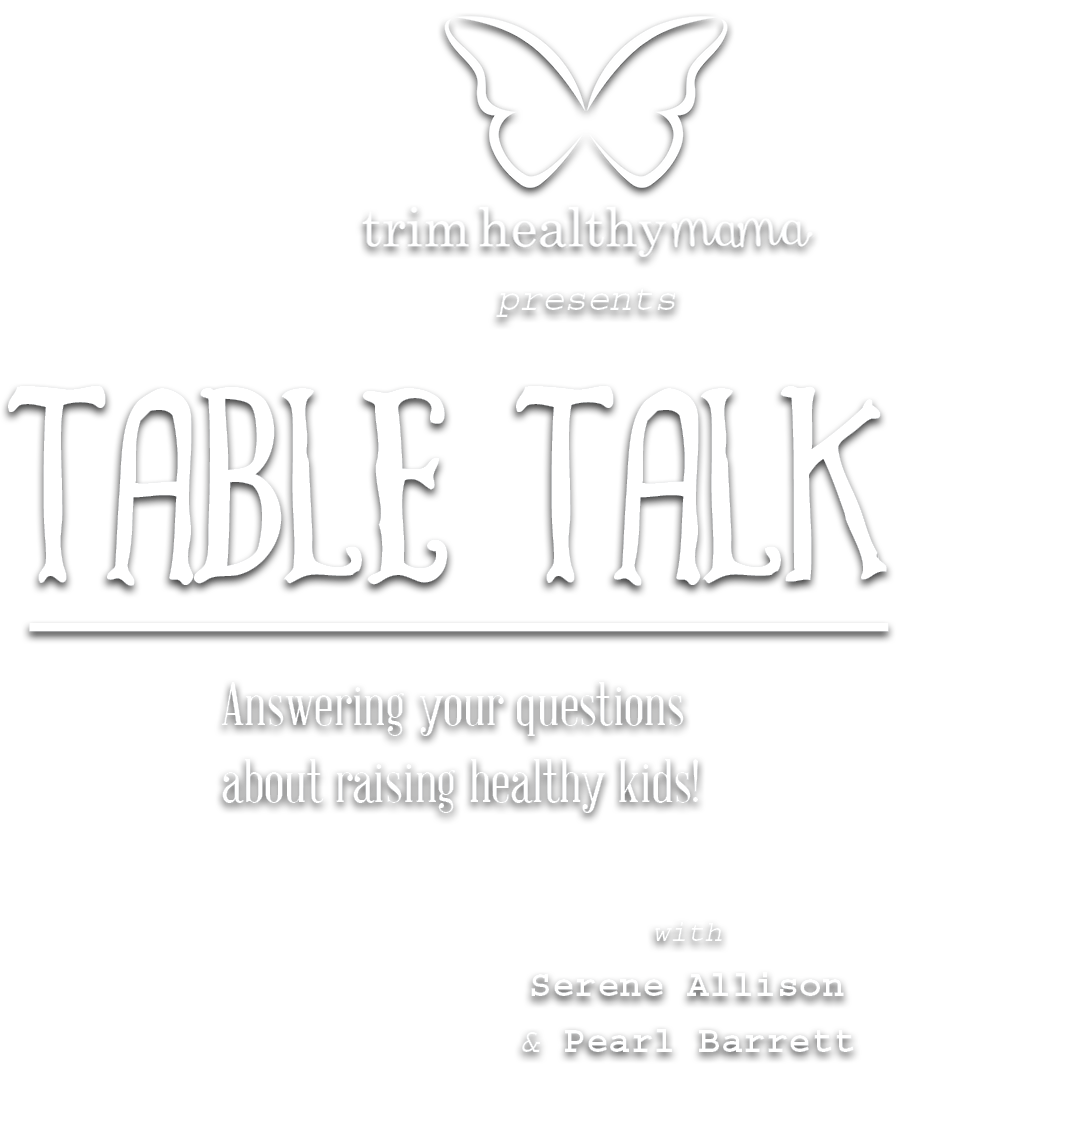 Table Talk title